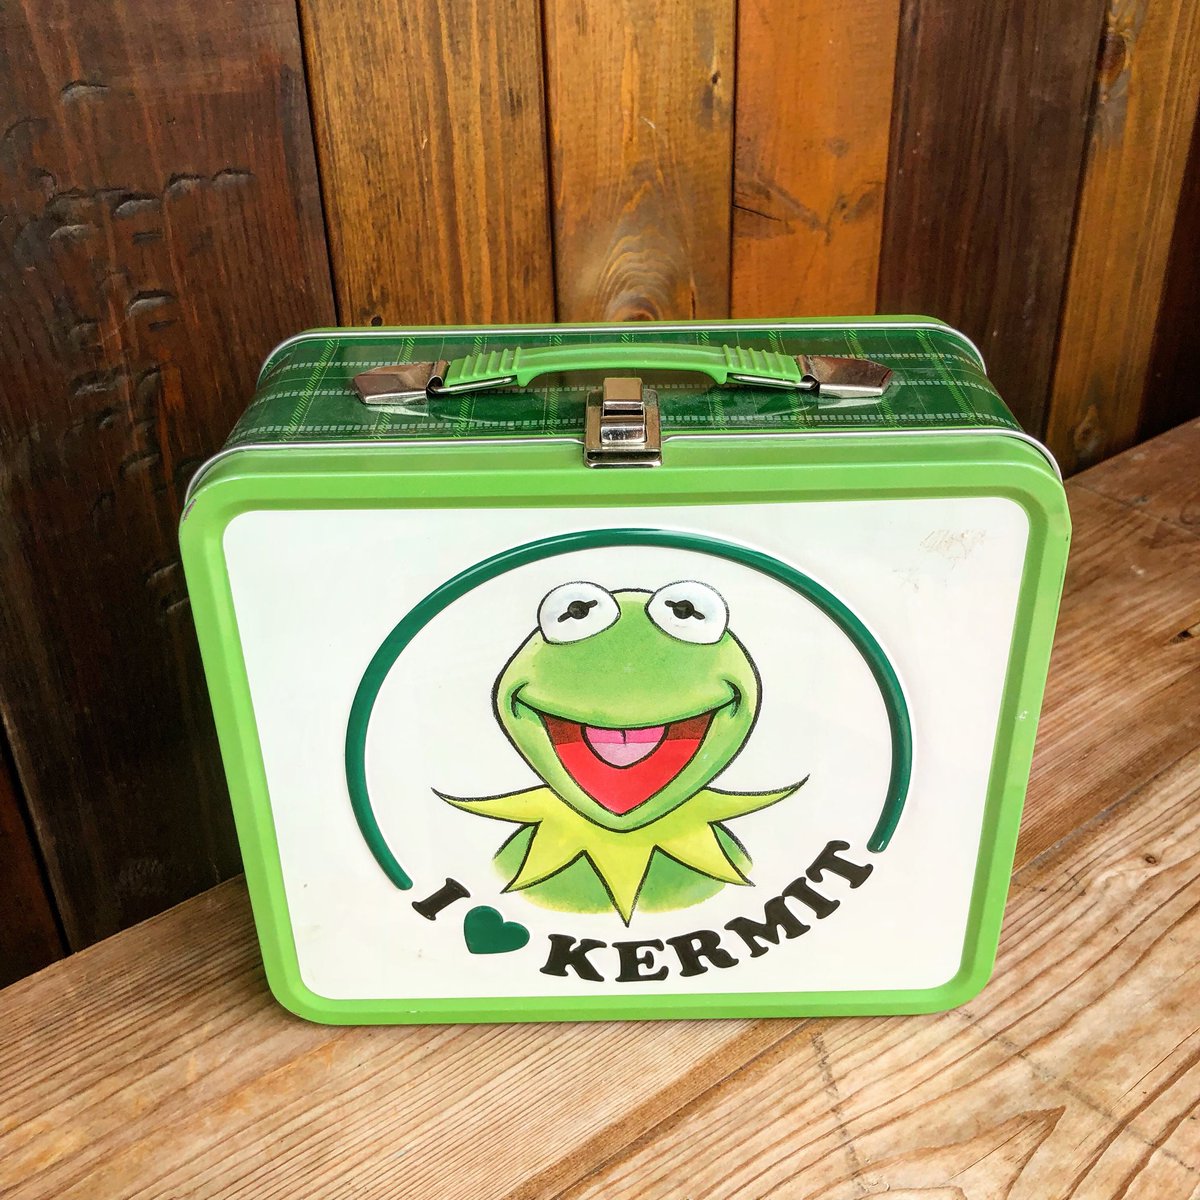 Hakidame Sur Twitter Kermit Lunch Box 3 300 Tax Kermit Muppets Jimhenson Vintage Goodstuff Frog Lunchbox カーミット カエル グリーン マペッツ ジムヘンソン ヴィンテージ ランチボックス 板橋区 下赤塚 Hakidame